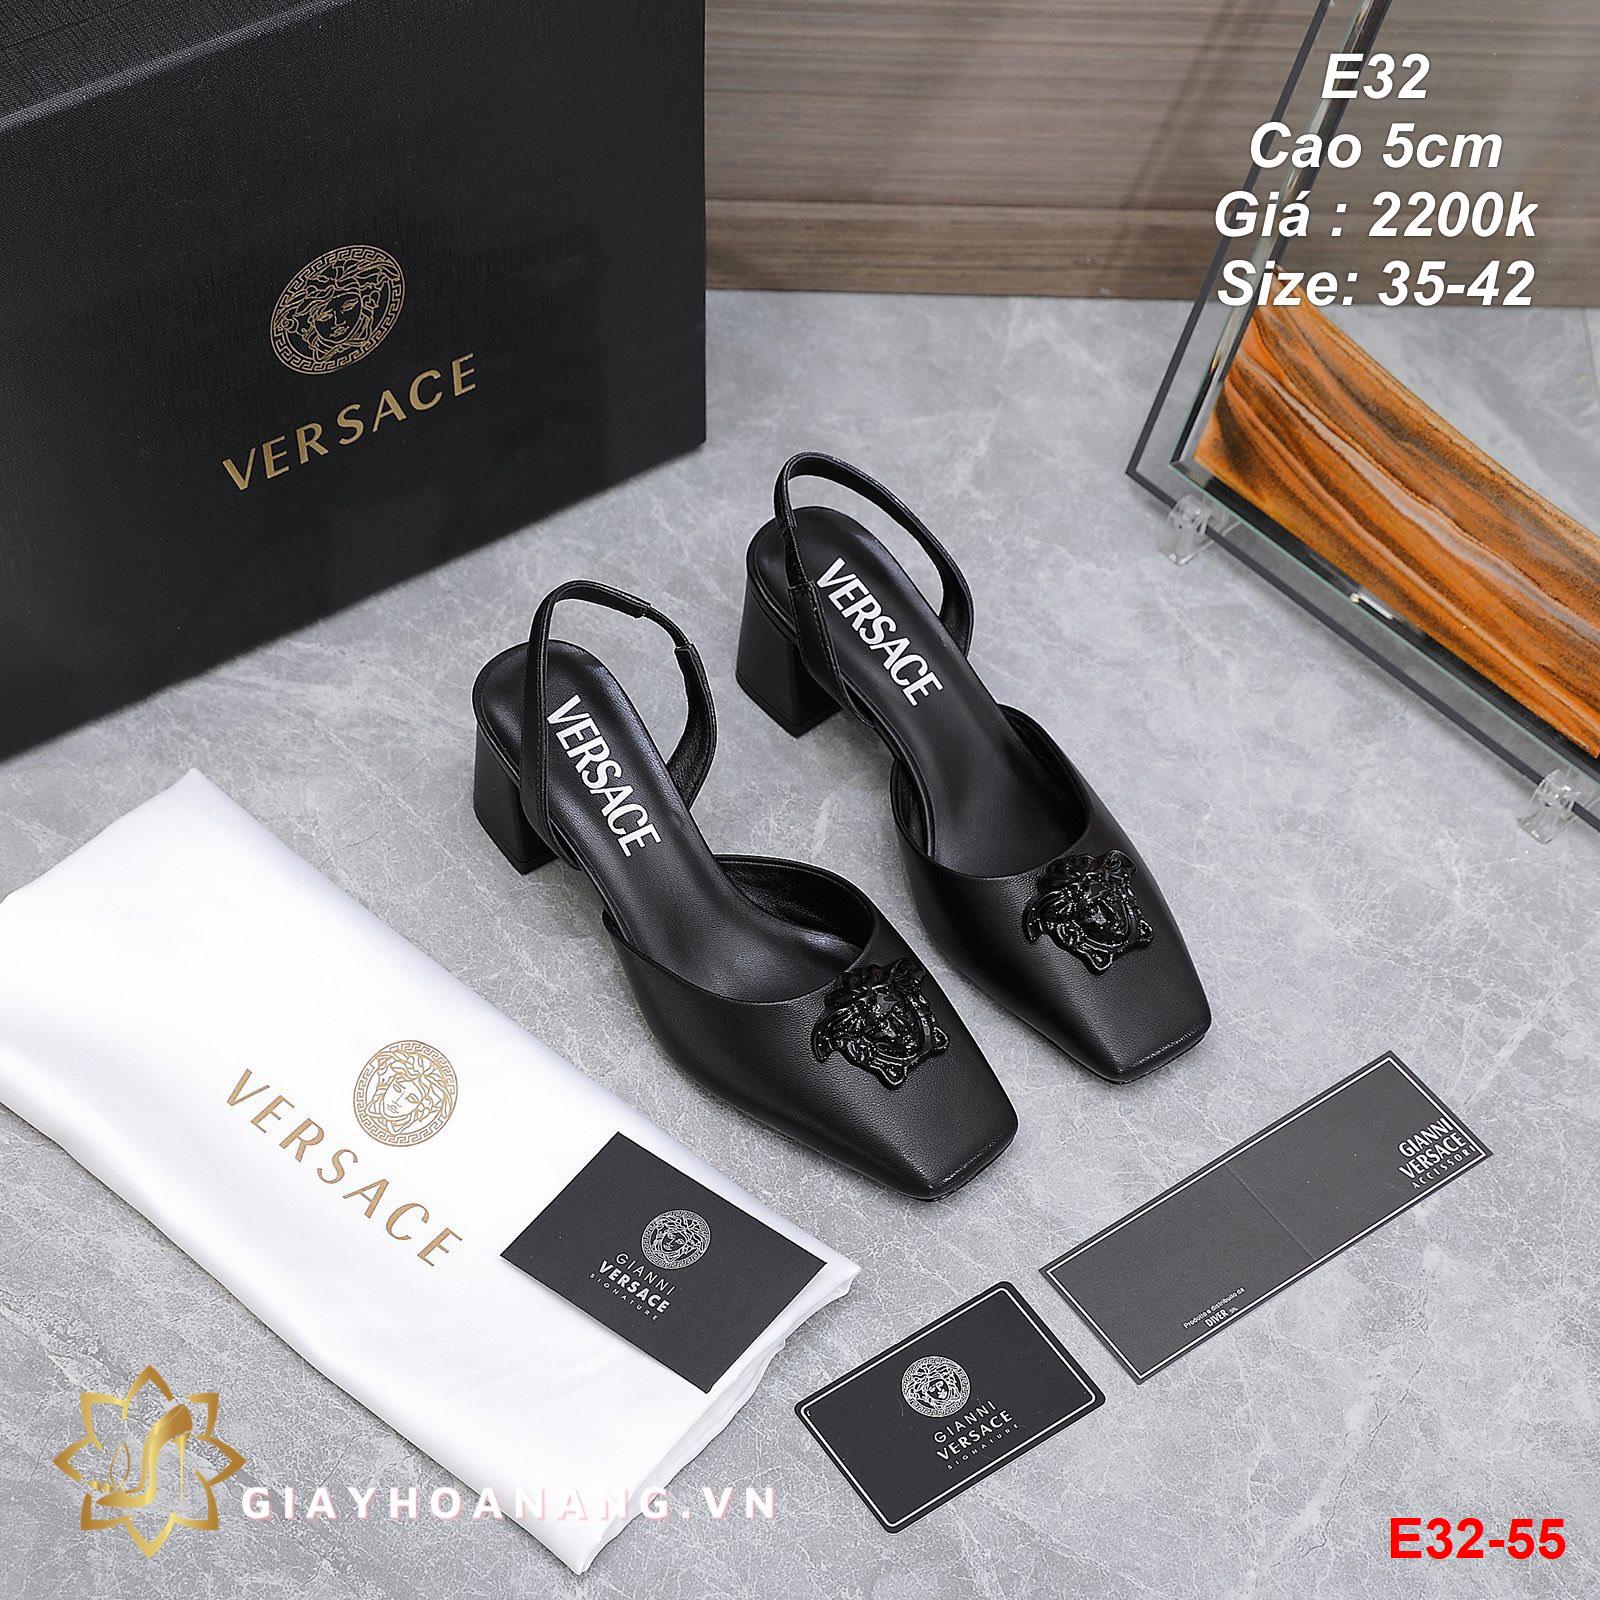 E32-55 Versace sandal cao 5cm siêu cấp